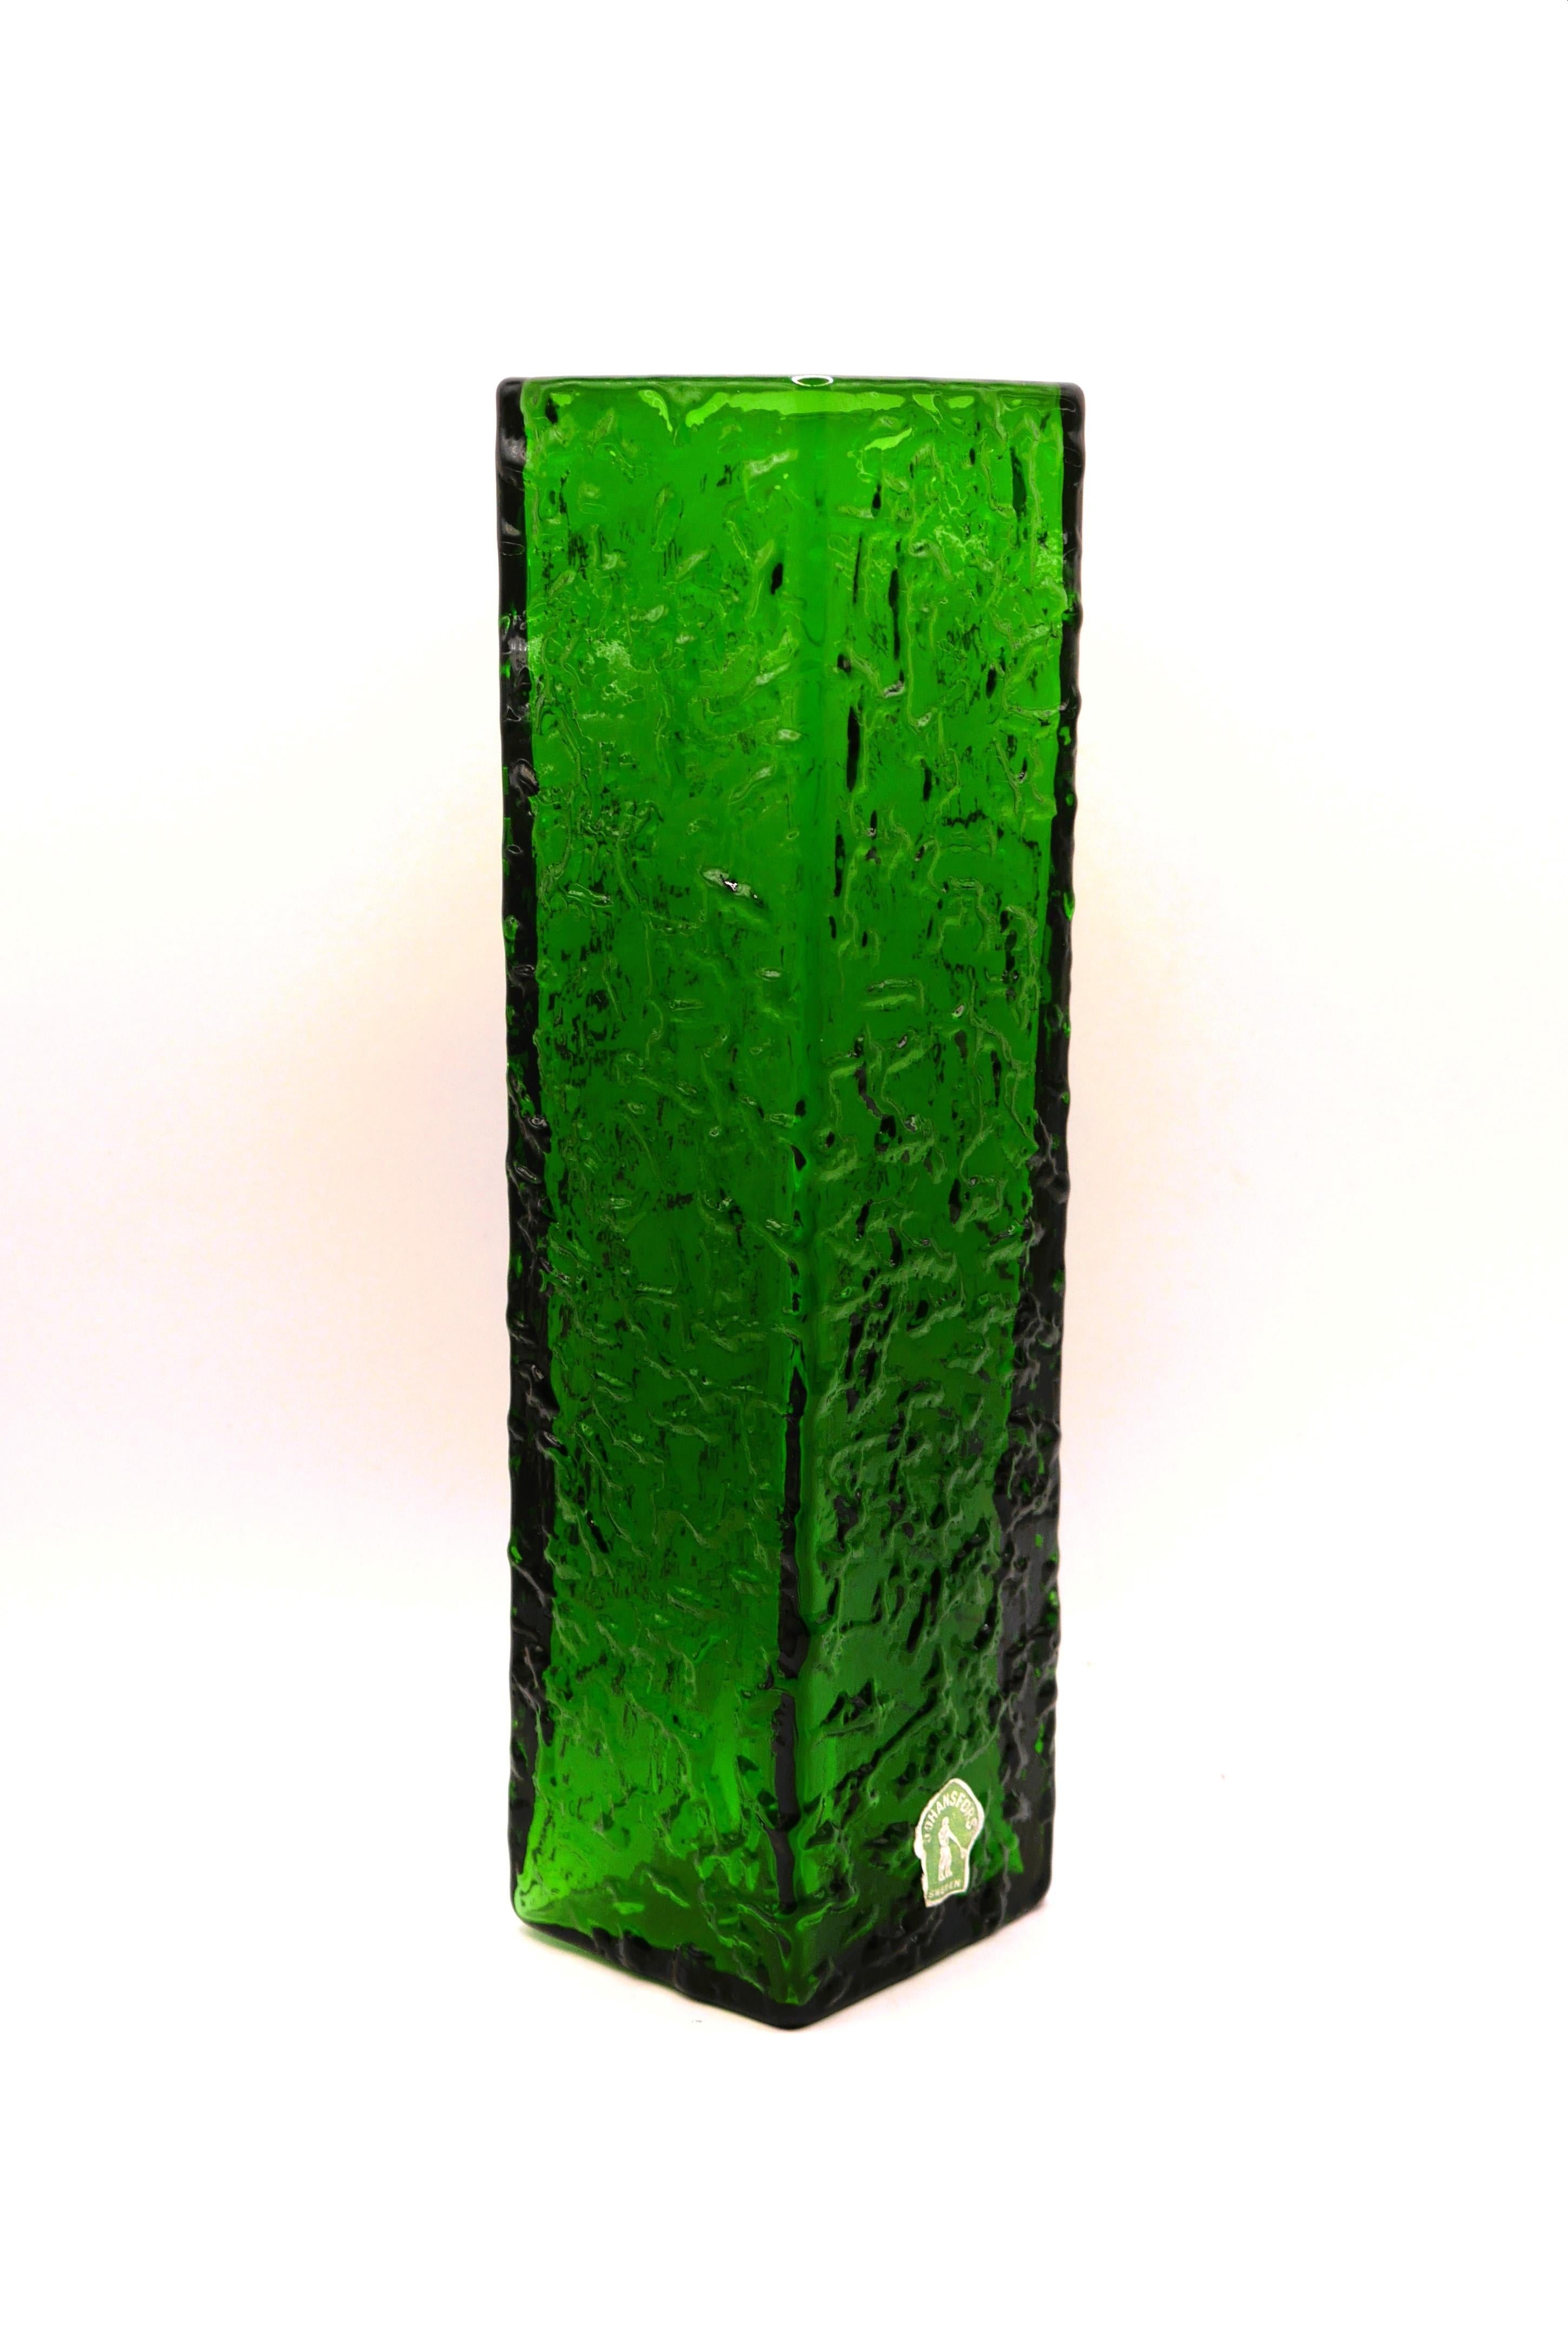 Mid-Century Modern Green Art Glass Vase by Bengt Orup for Johansfors, Sweden